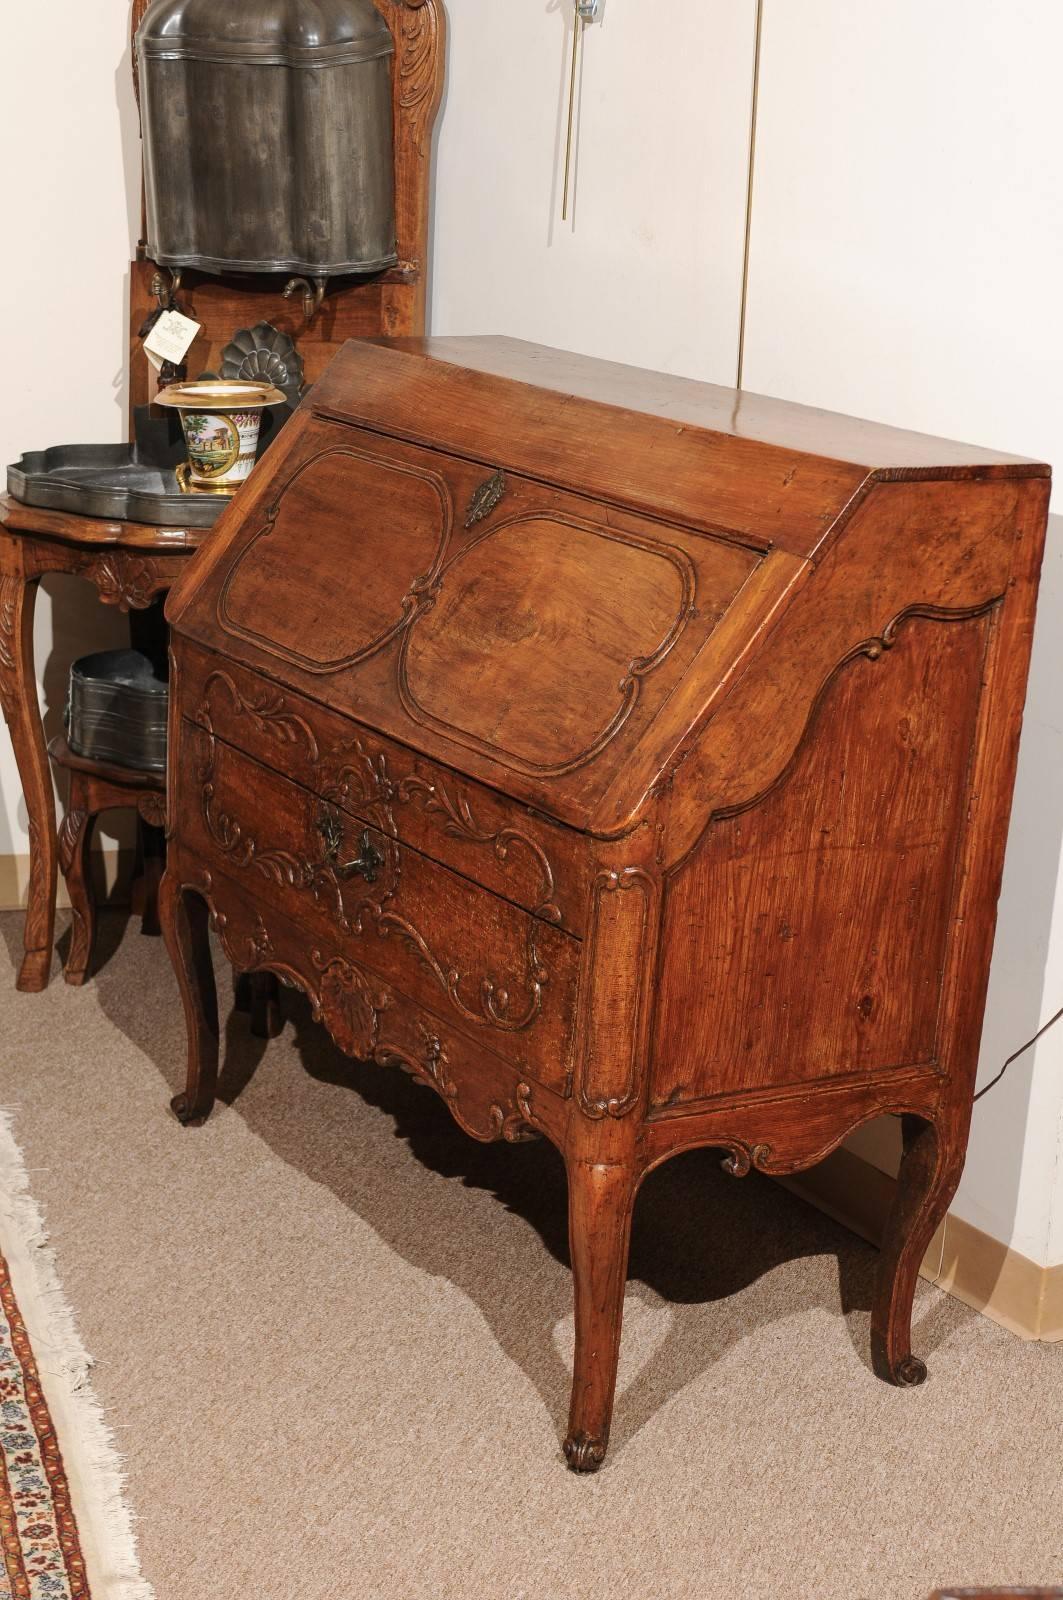 Régence French Fruitwood Regence Bureau Slant Front Desk, Early 18th Century For Sale